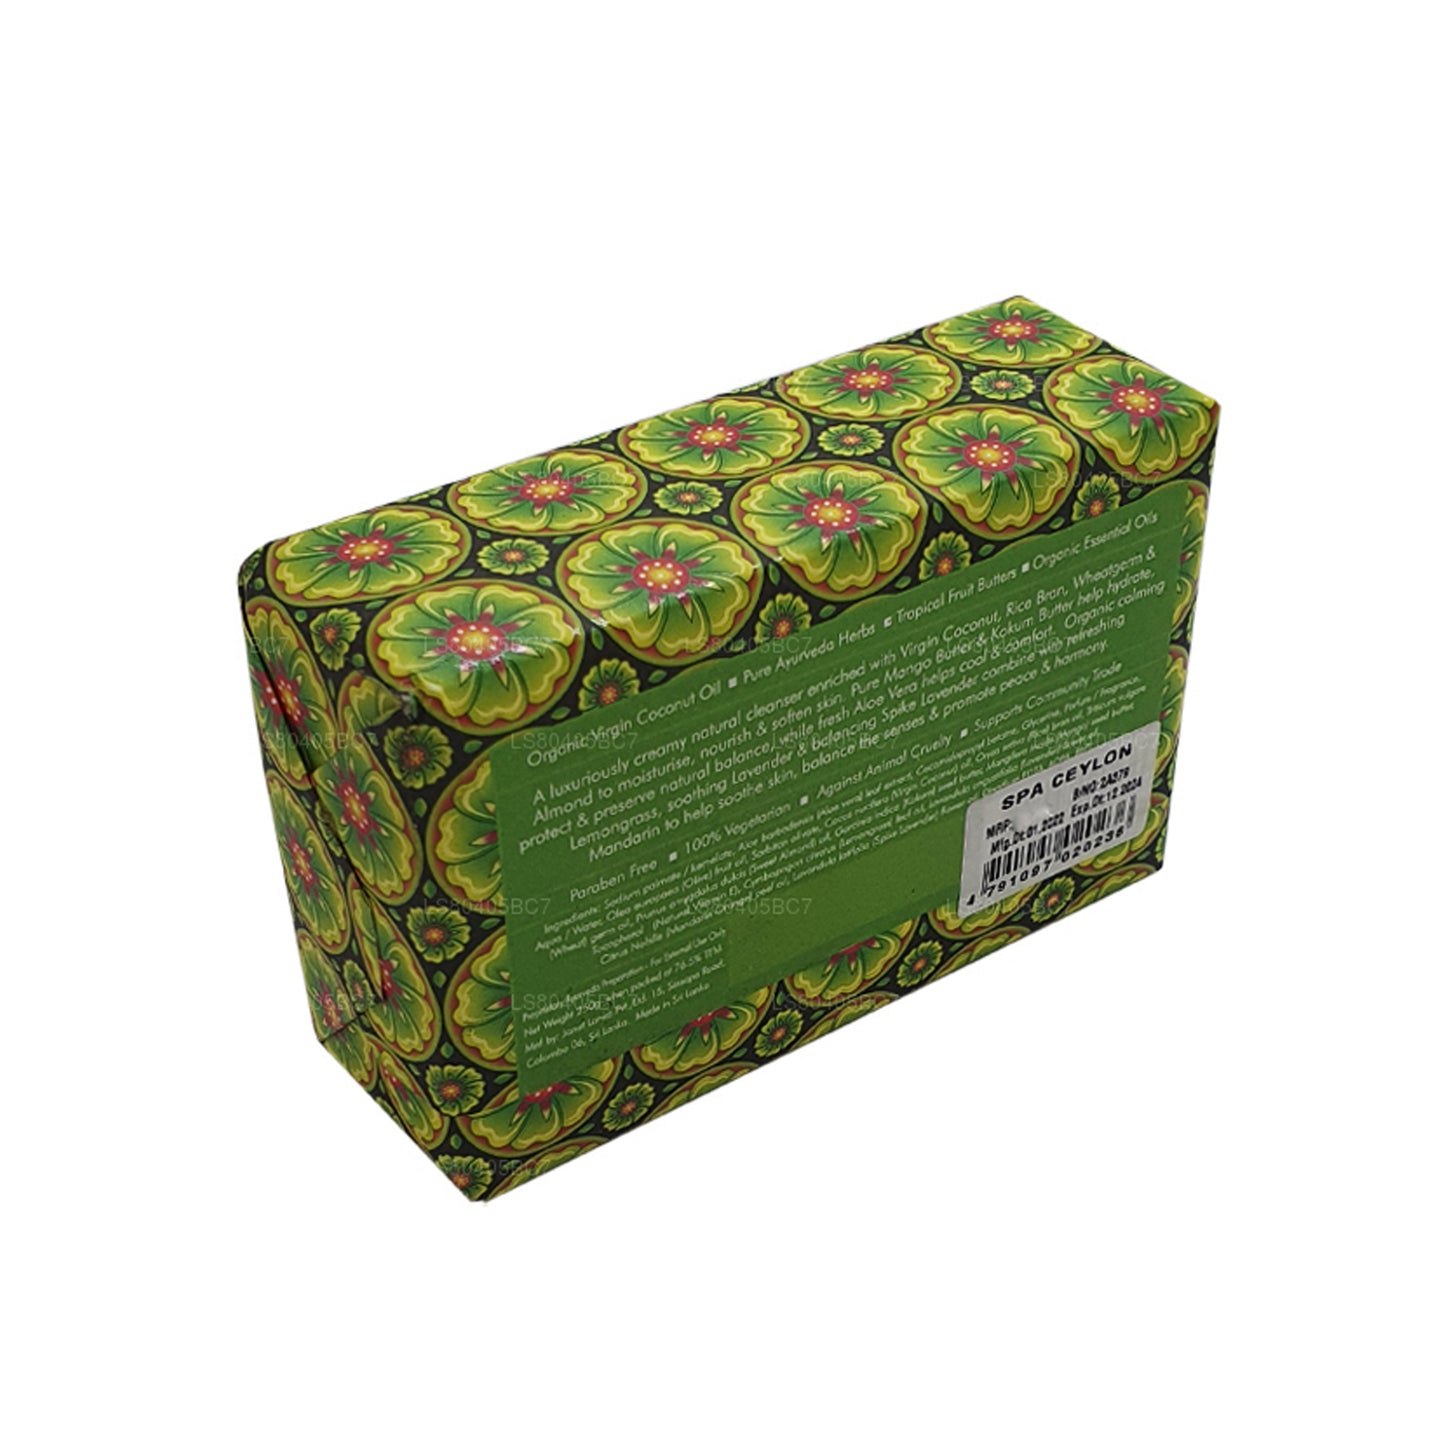 Spa Ceylon Luxus-Seife Zitronengras Mandarine (250 g)